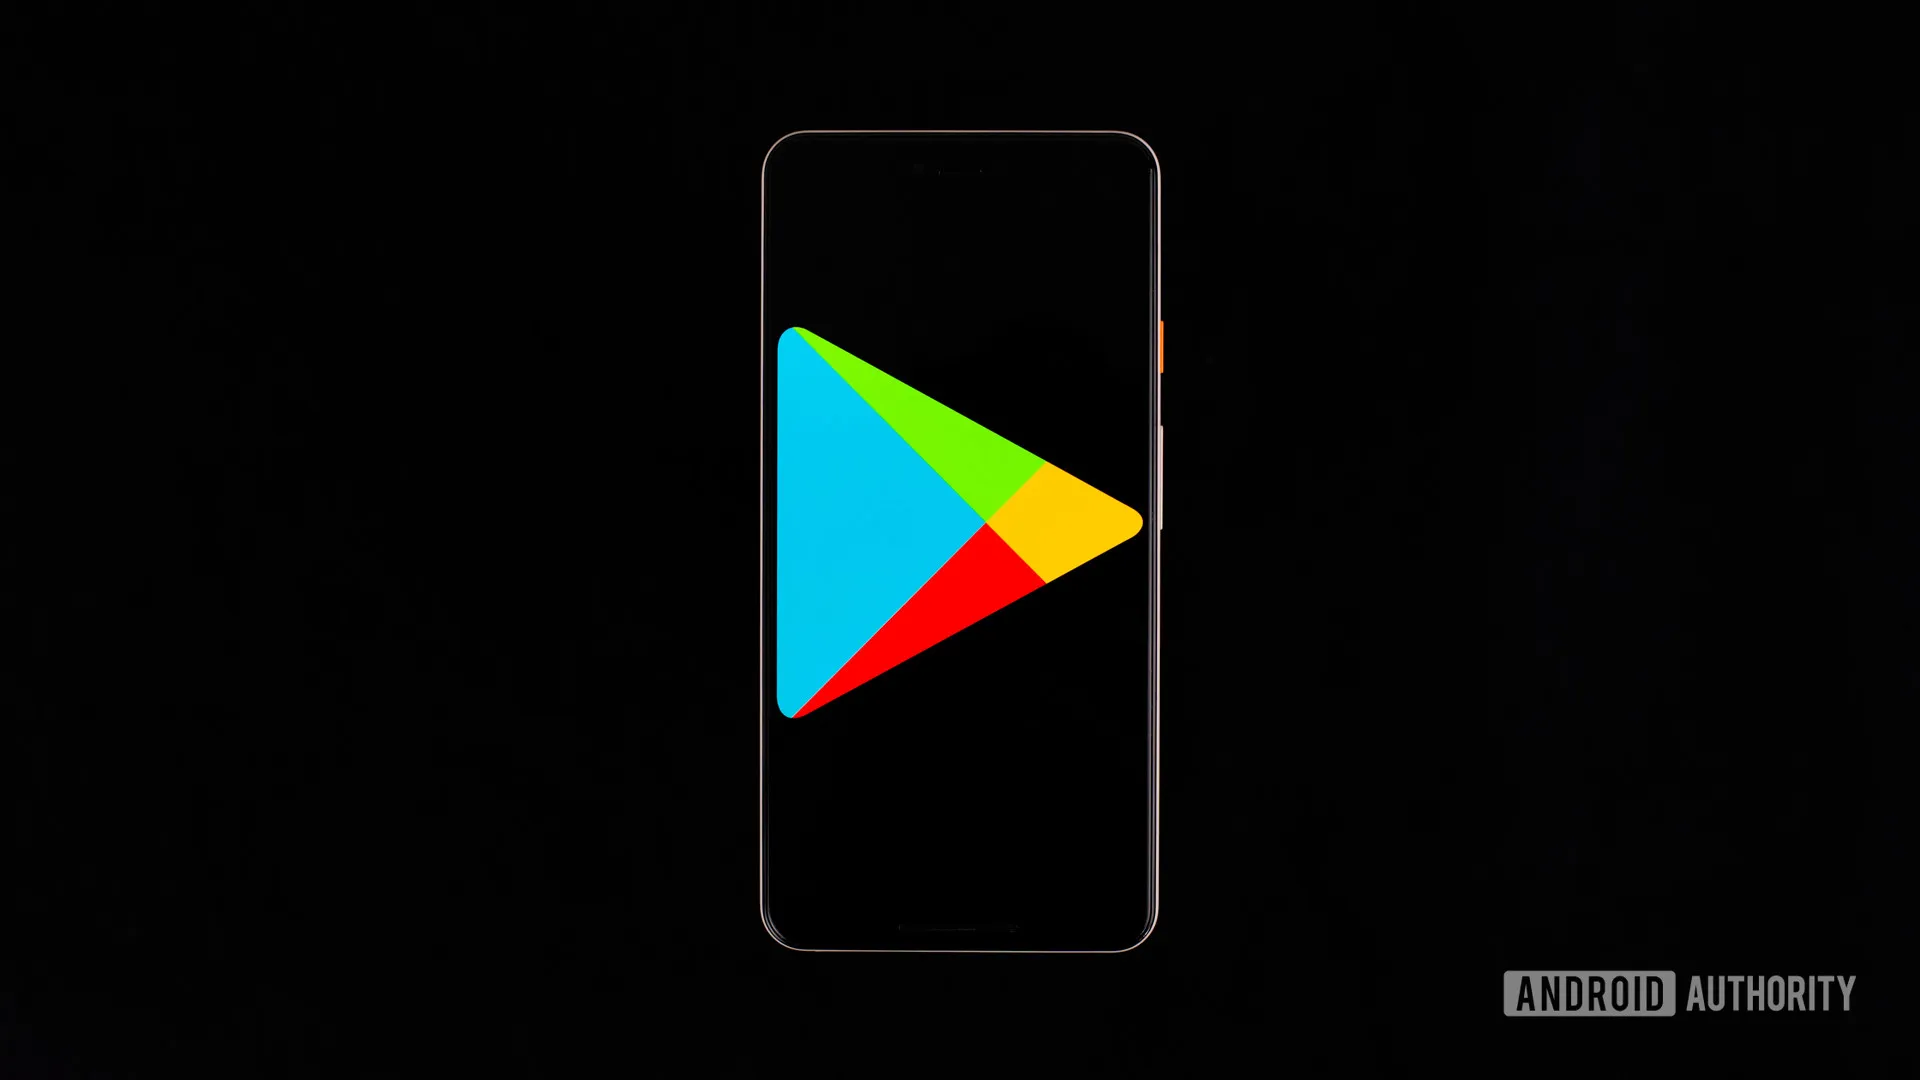 Google Play Store on smartphone stock photo 1